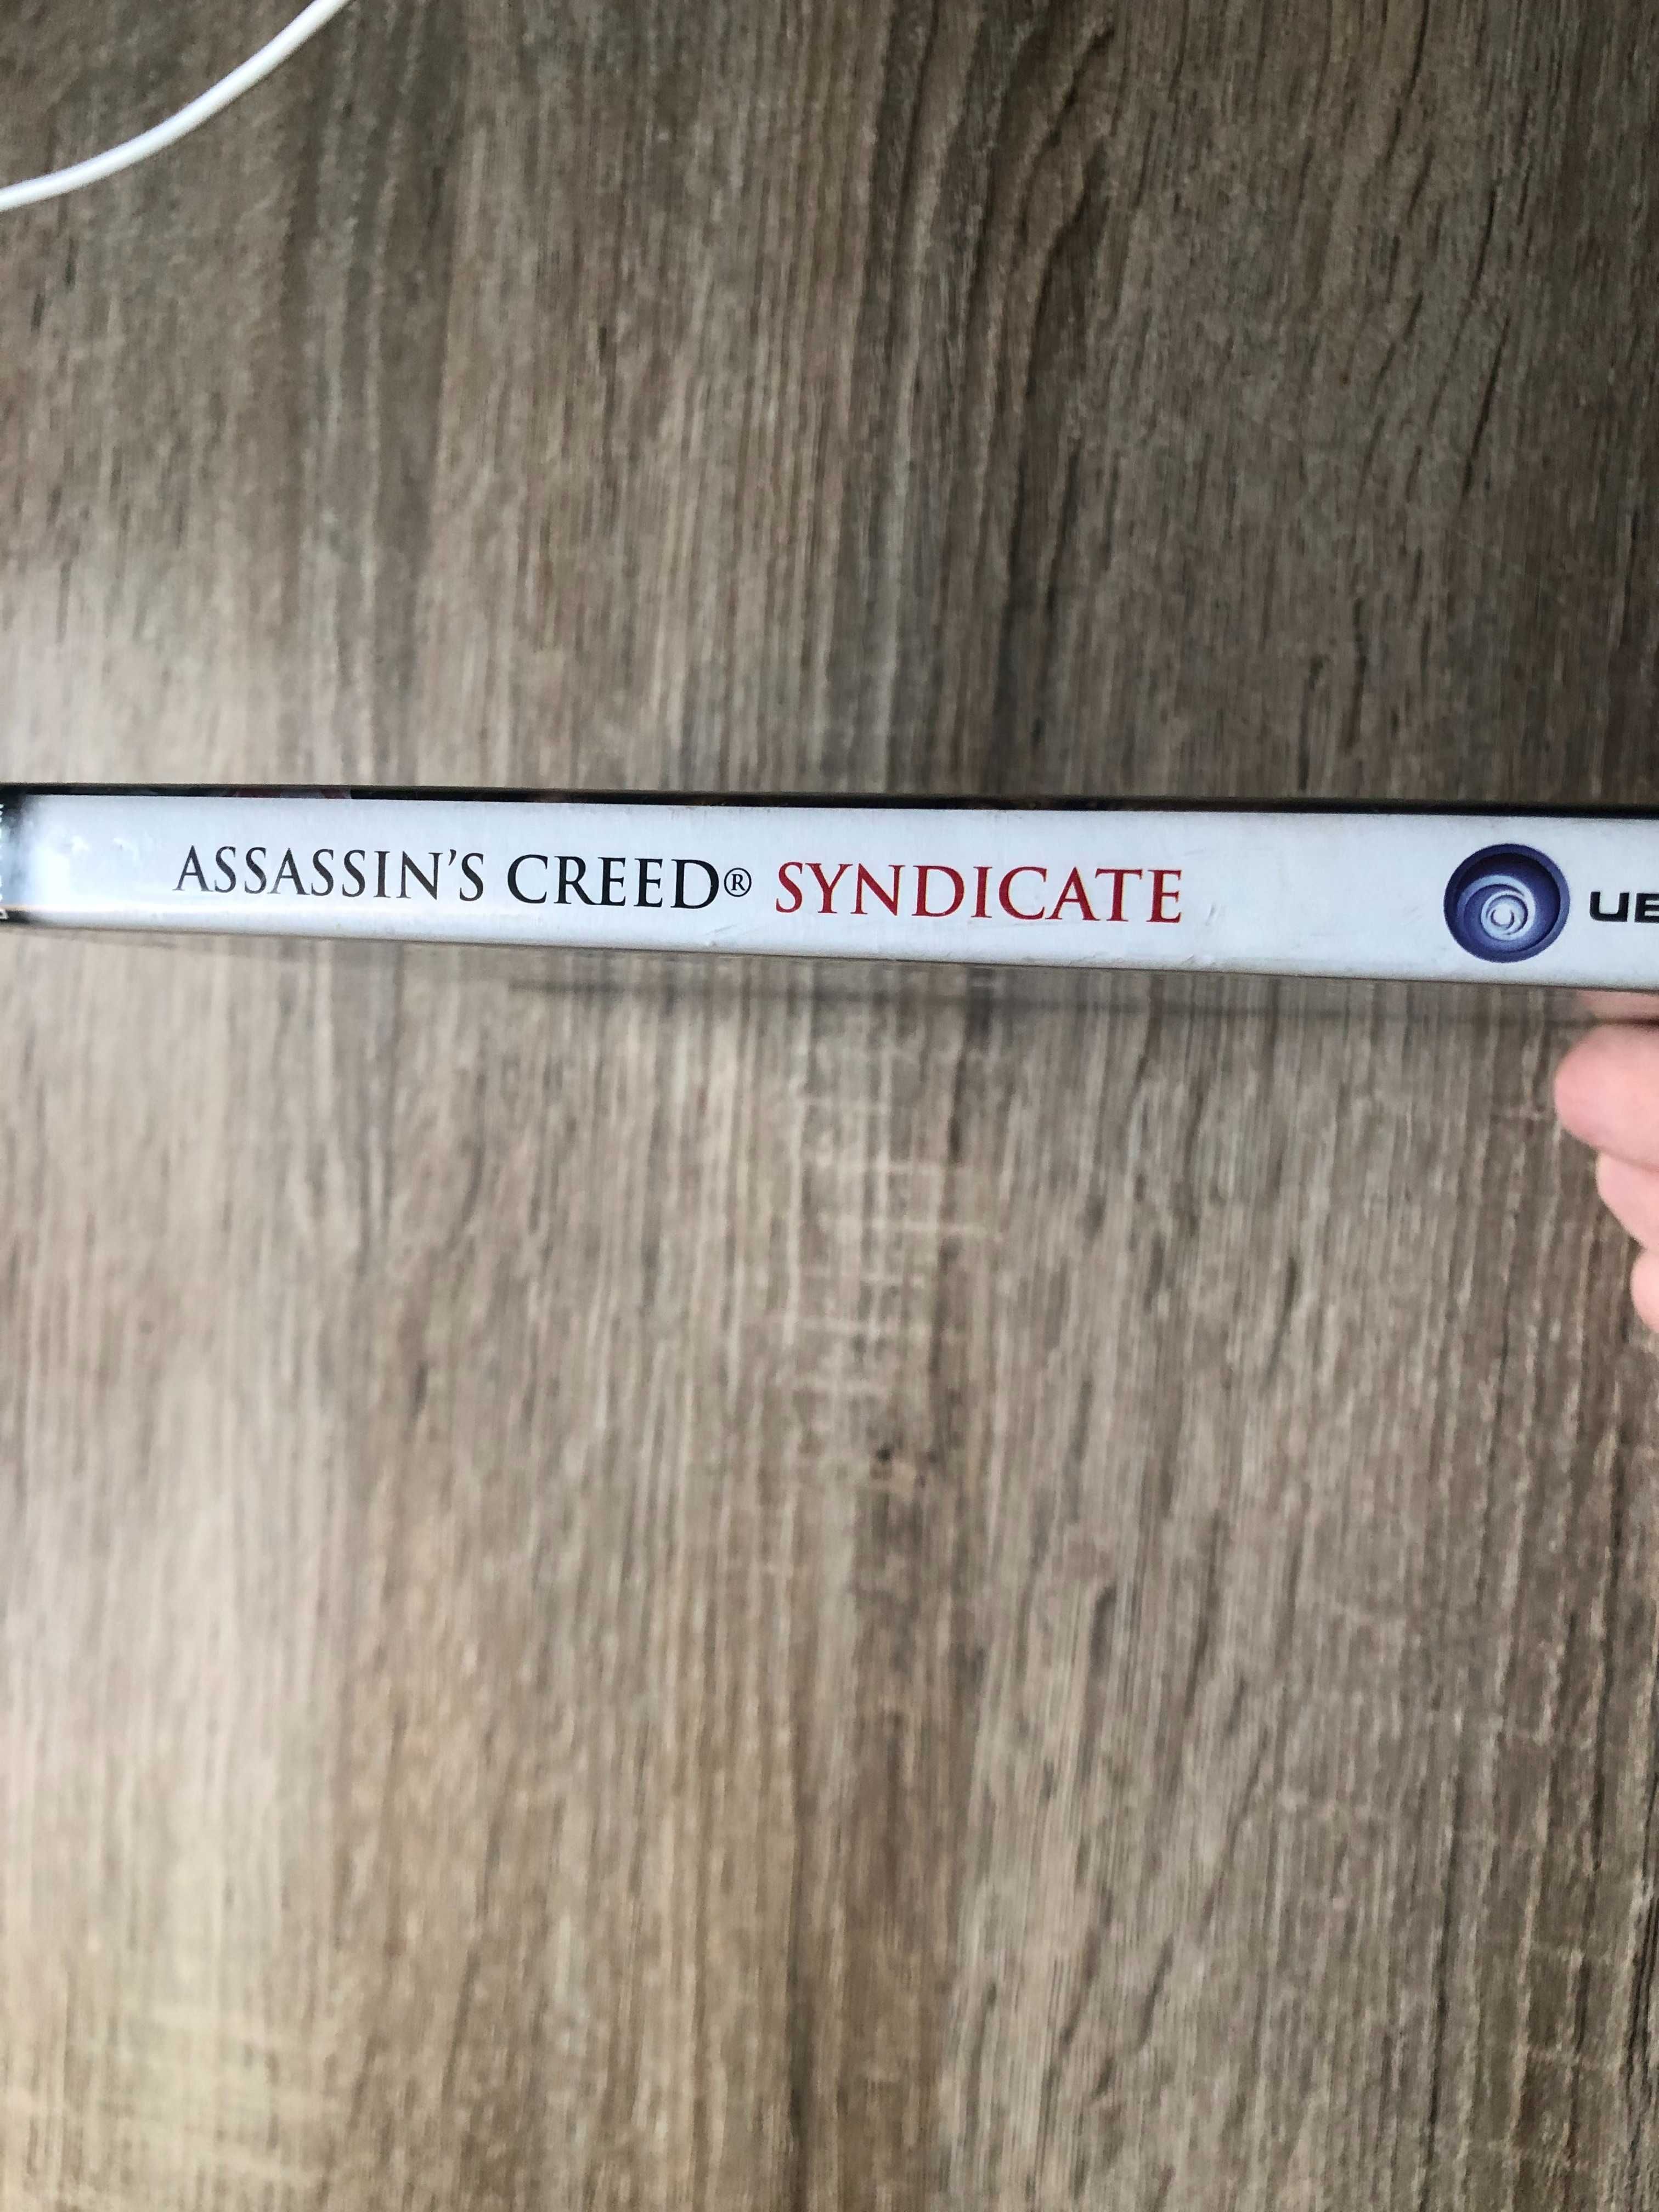 Assassins Creed Syndicate gra na PC niemiecka wersja językowa